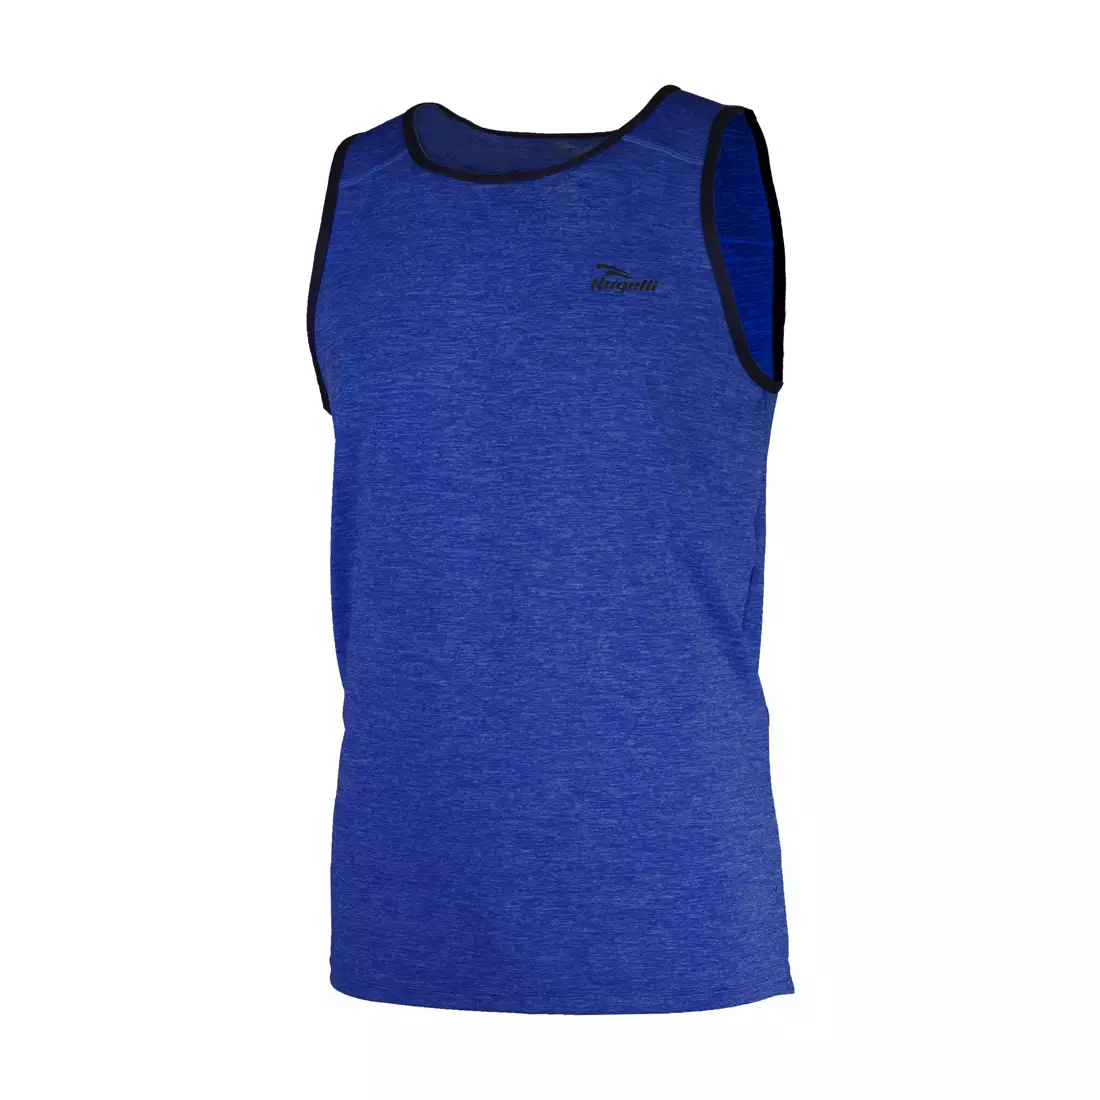 ROGELLI RUN BARRETT 830.238 - men's sleeveless T-shirt/running top, color: blue